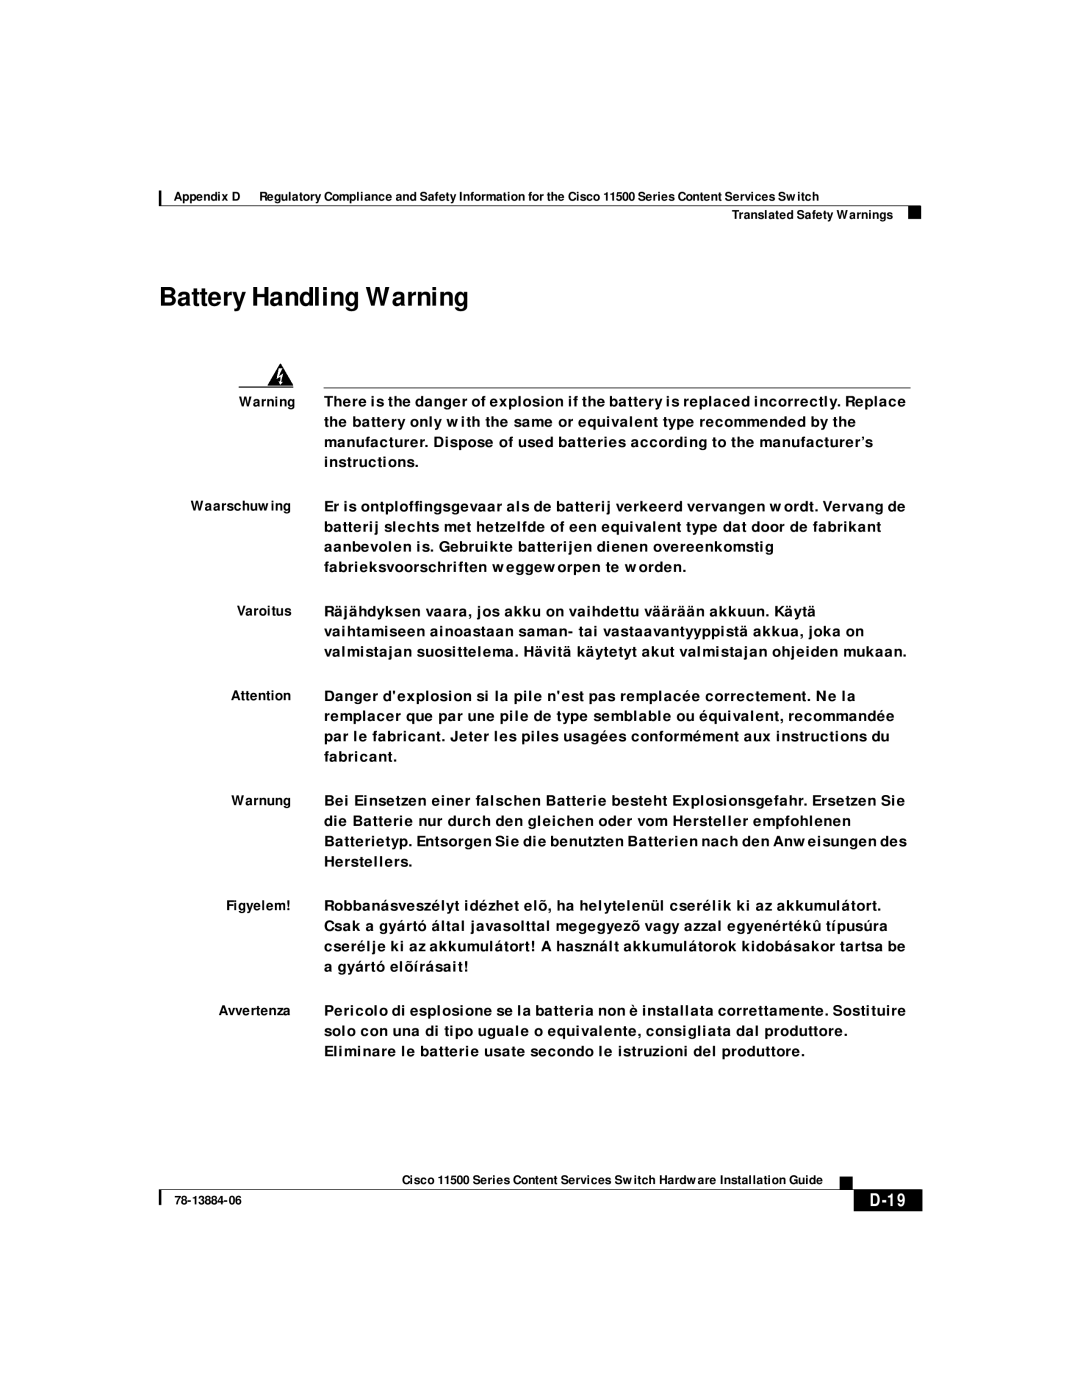 Cisco Systems 11500, 11506, 11503, 11501 appendix Battery Handling Warning, D-19 